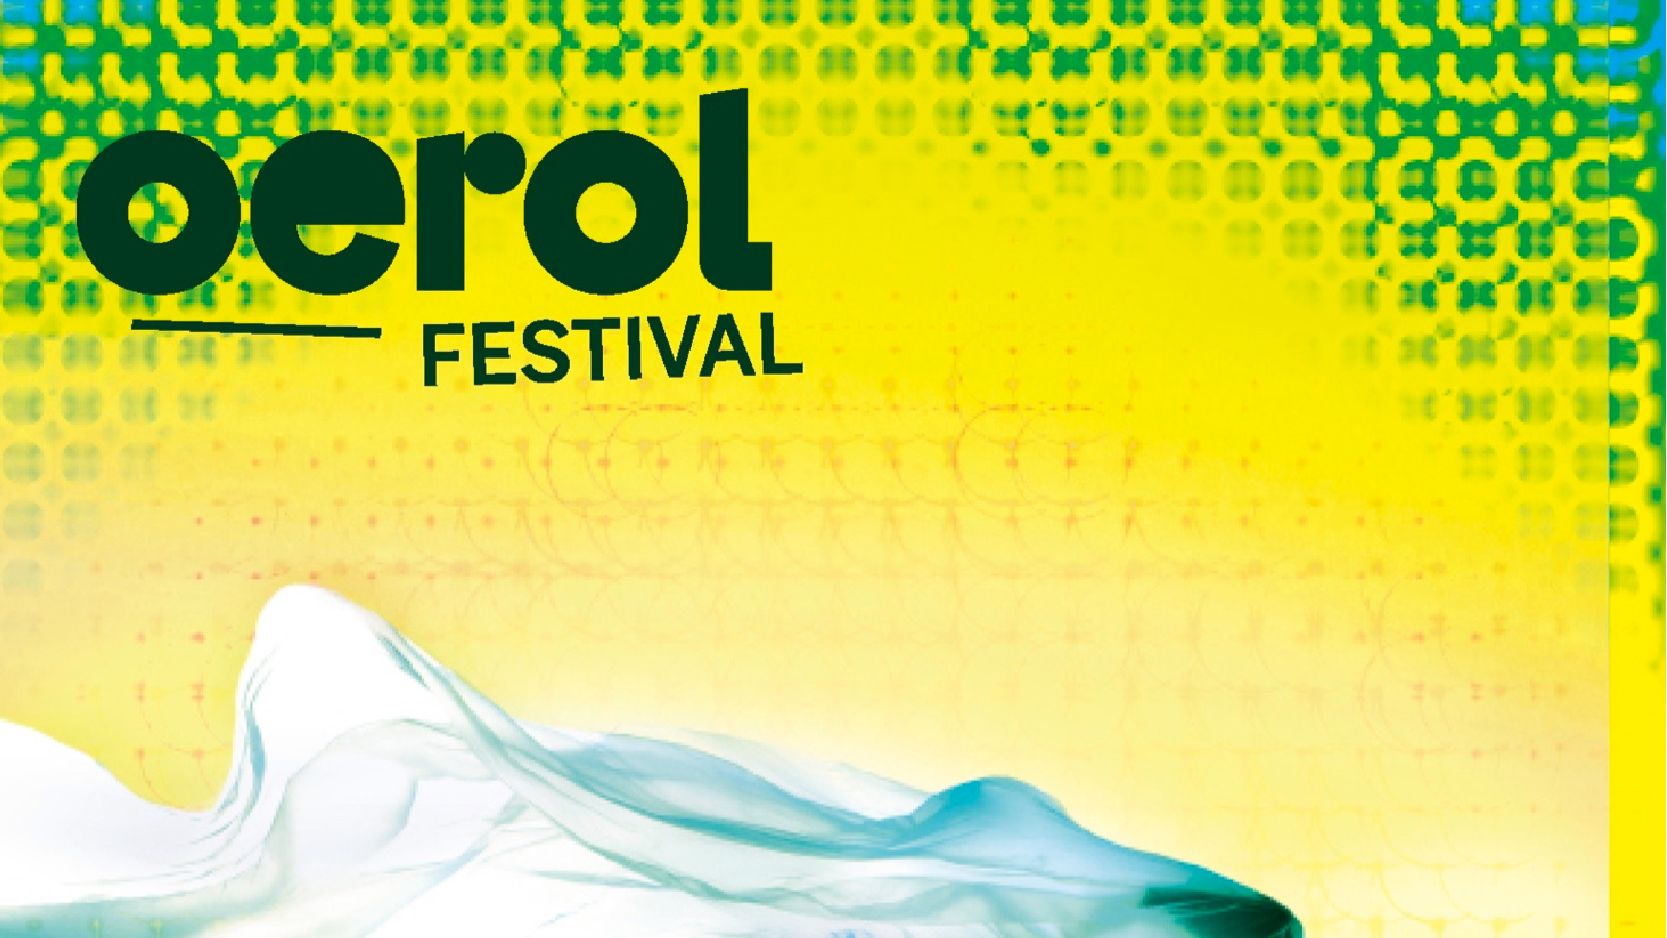 Oerol Festival cover